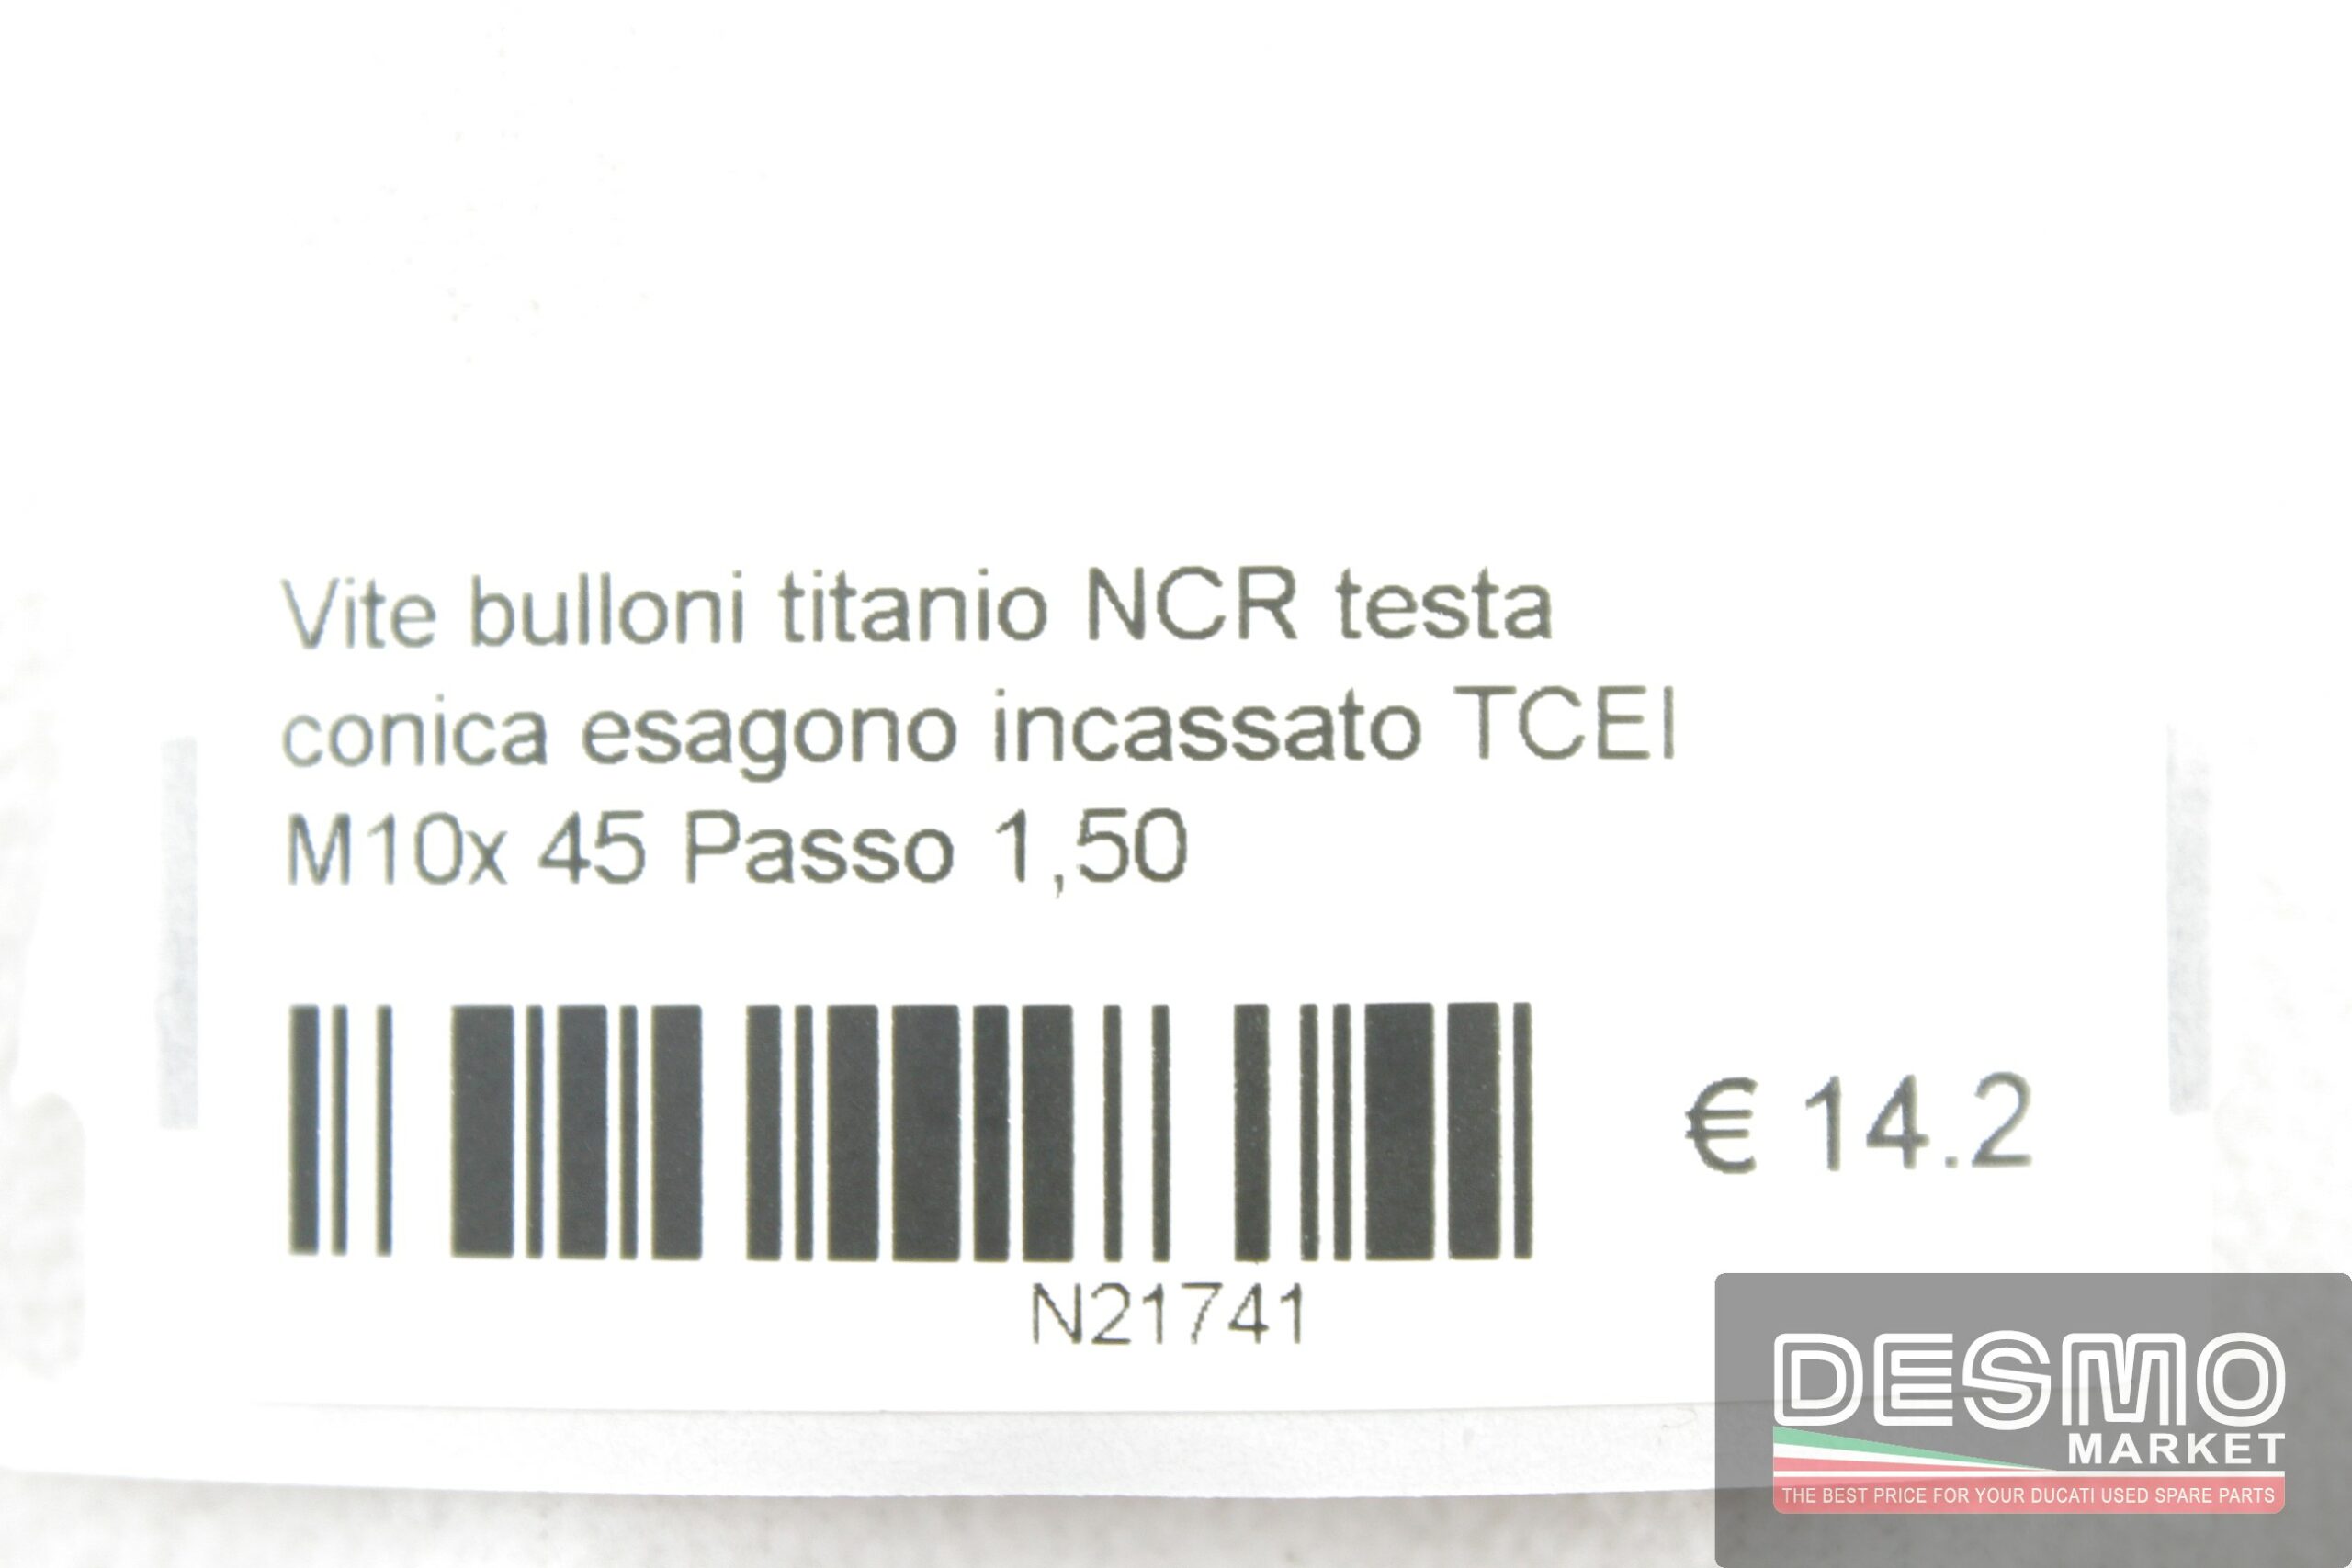 Vite bulloni titanio NCR  TCEI  M10x 45 Passo 1,50